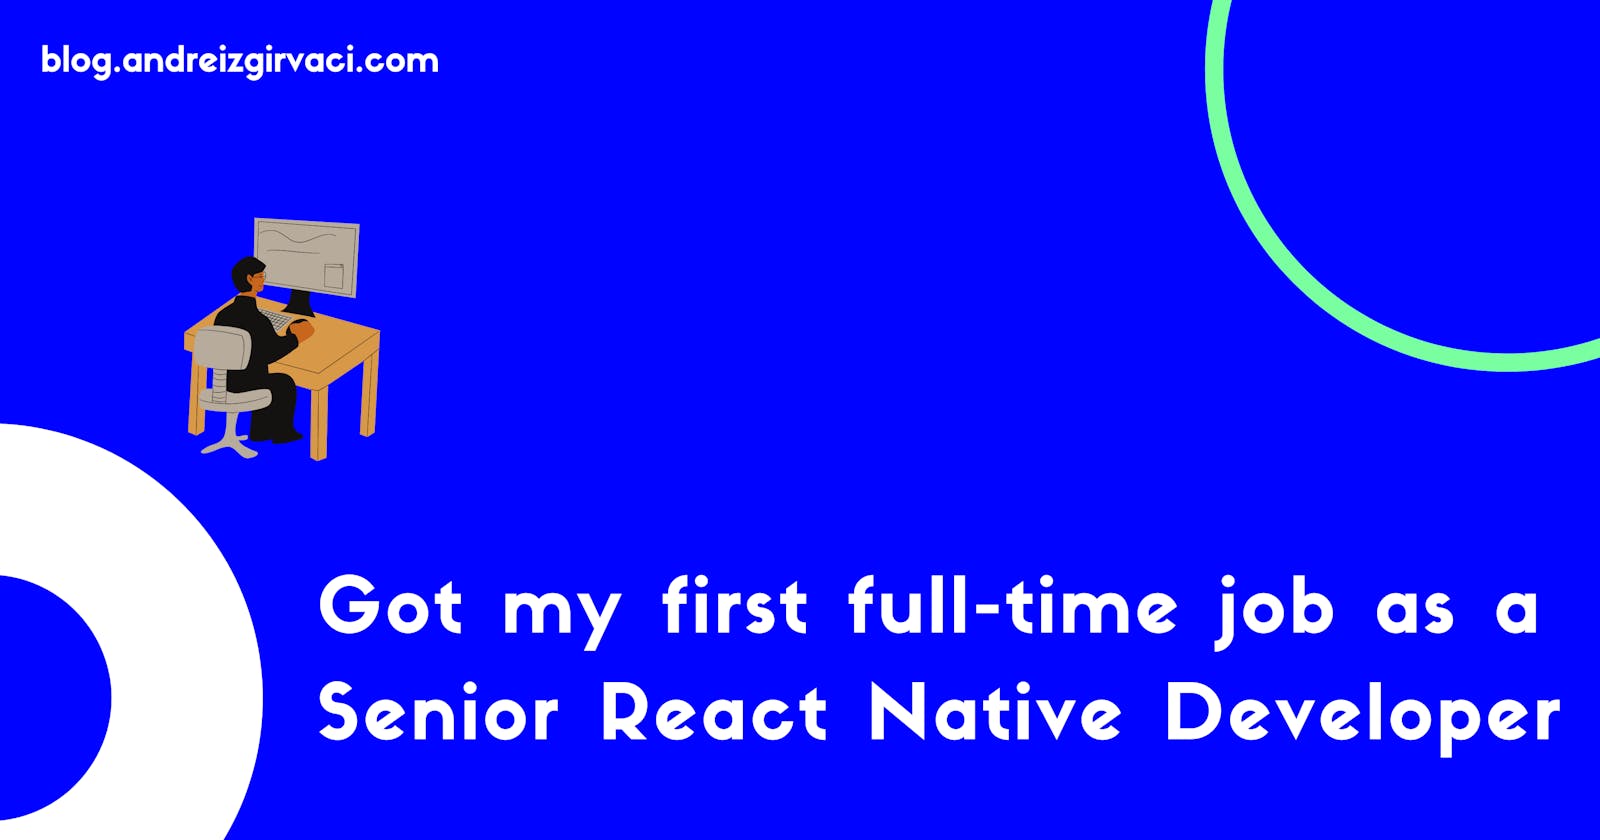 Got my first full-time job as a Senior React Native Developer 🎉